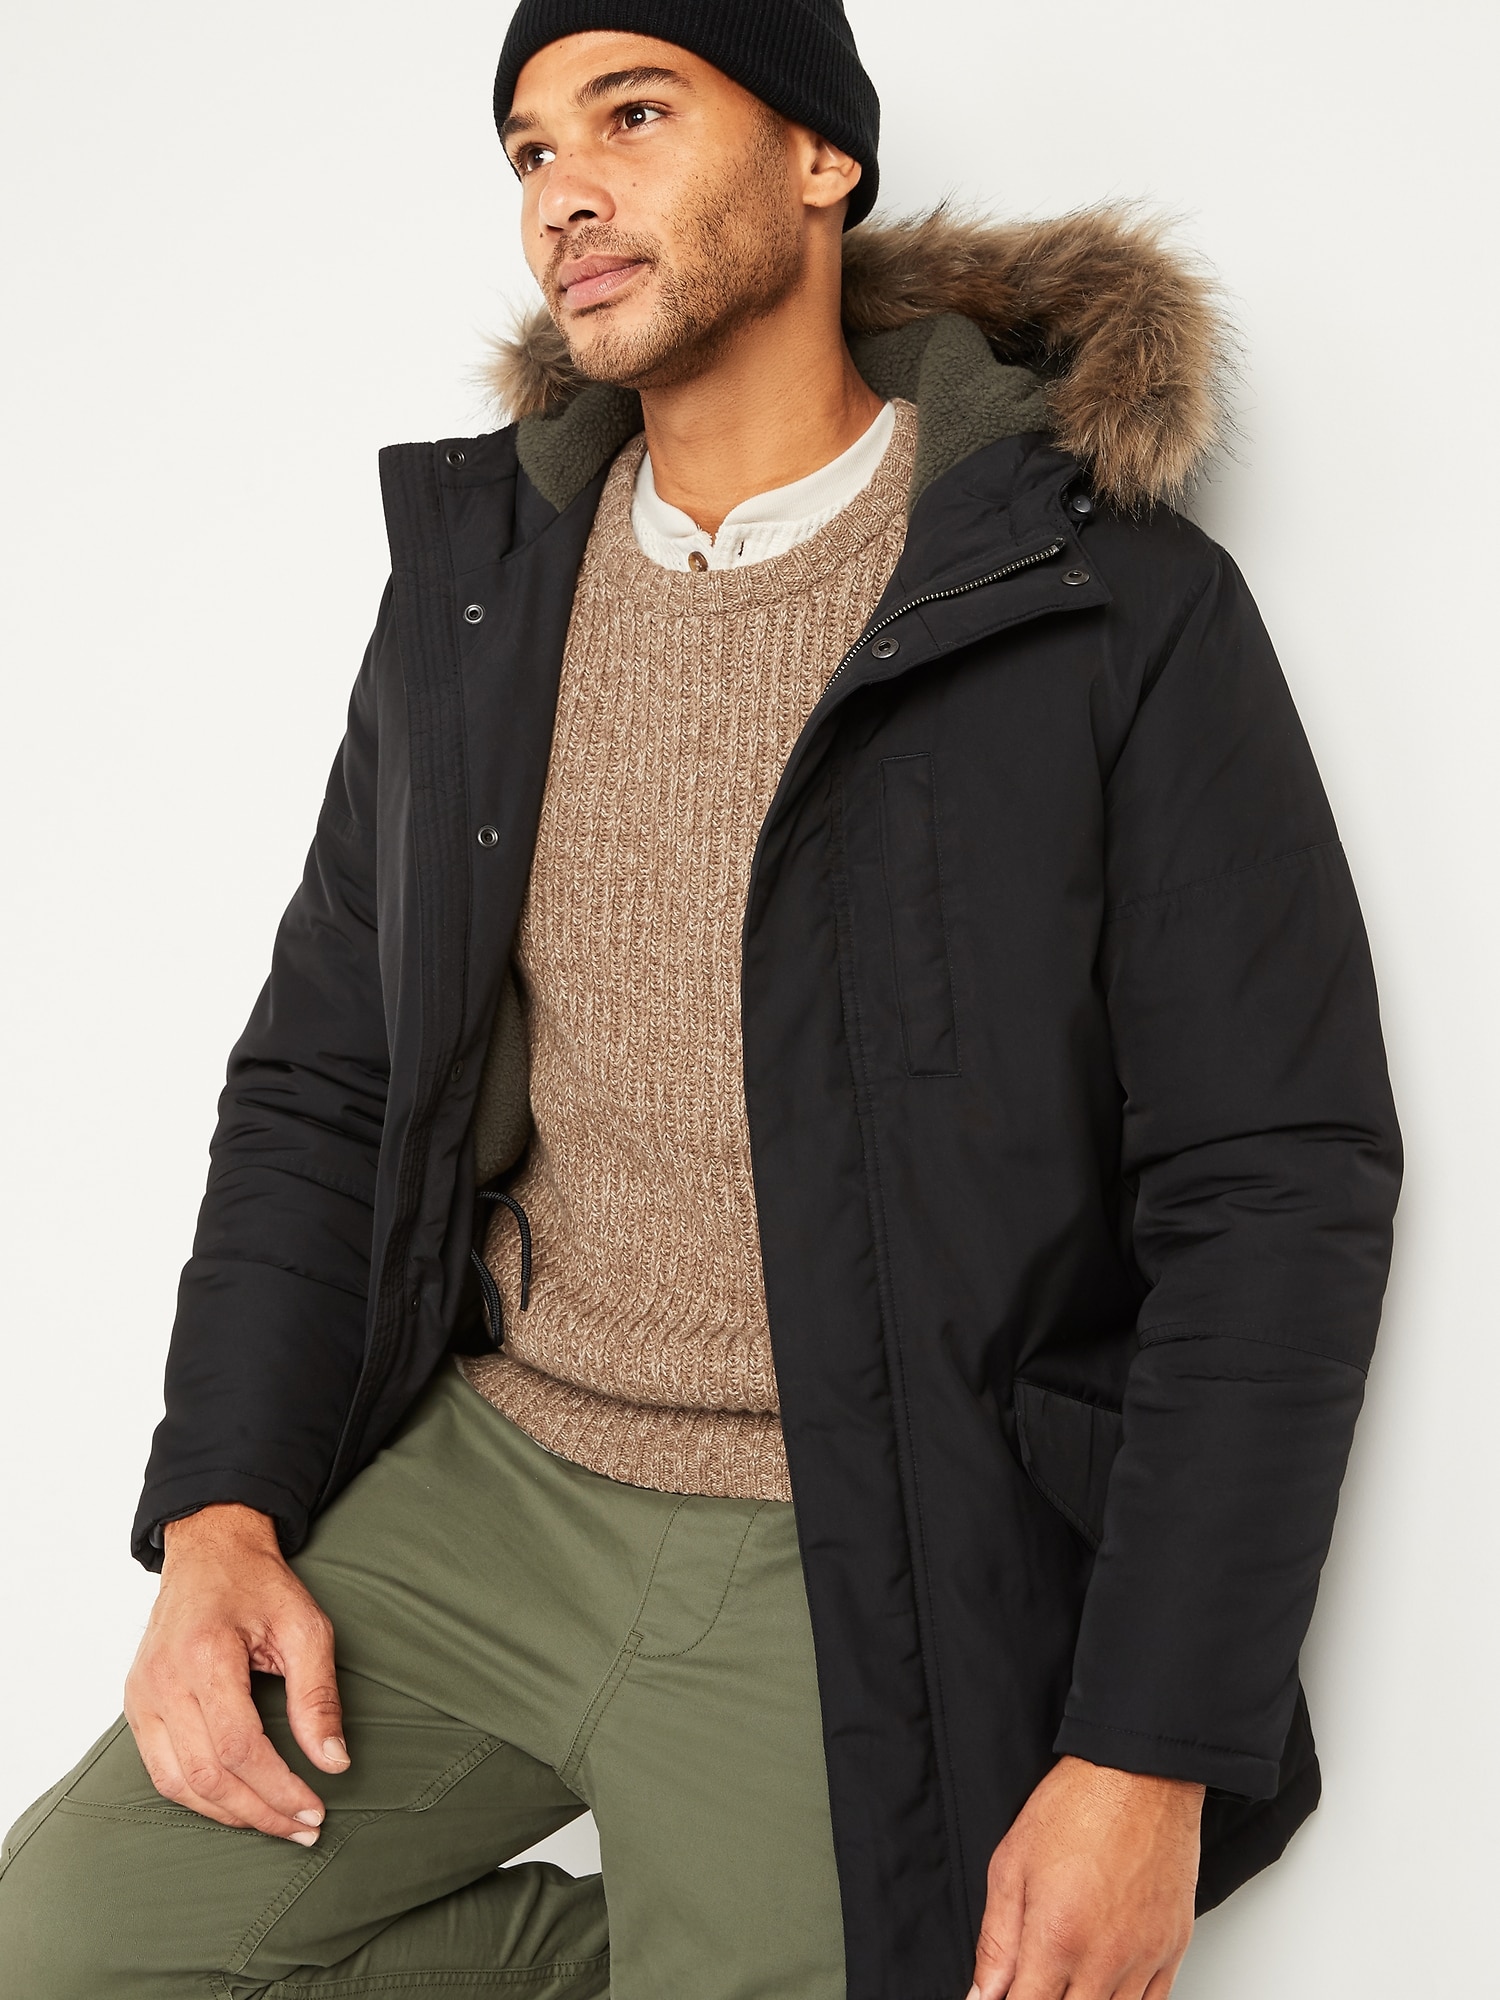 YXP Szory Mens Thicken Parka Coat Winter Warm Jacket with Removable Fur Hood